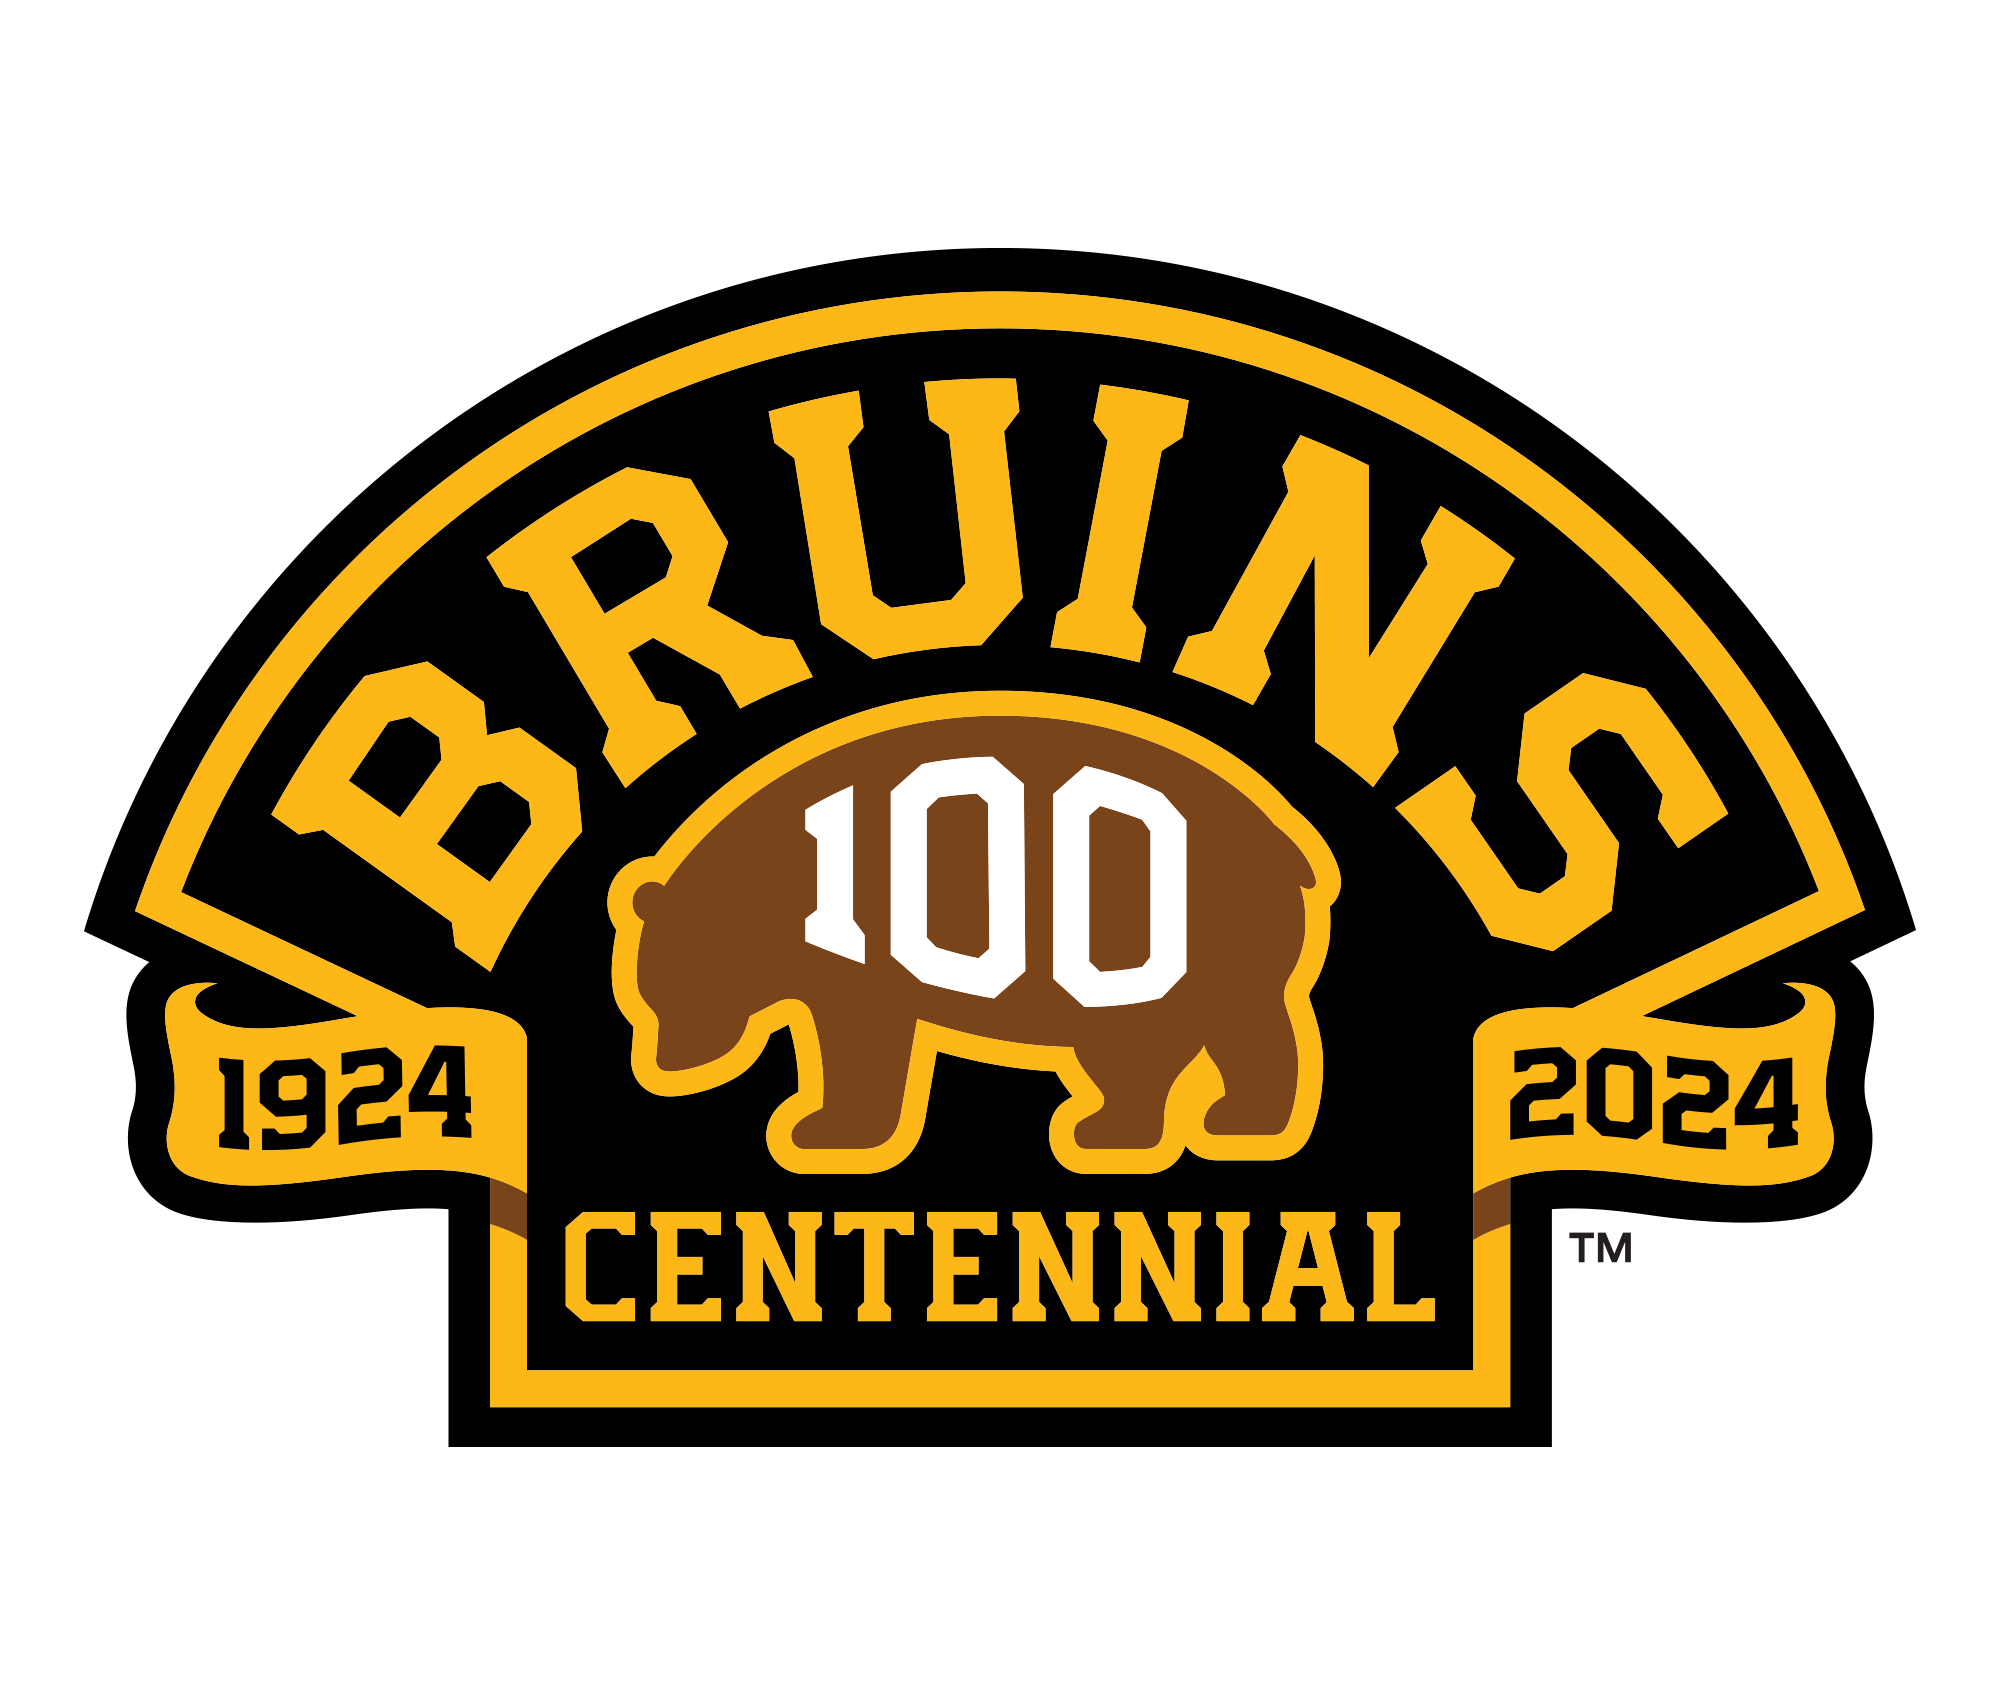 Where to buy Bruins brand new Centennial 100th anniversary jerseys